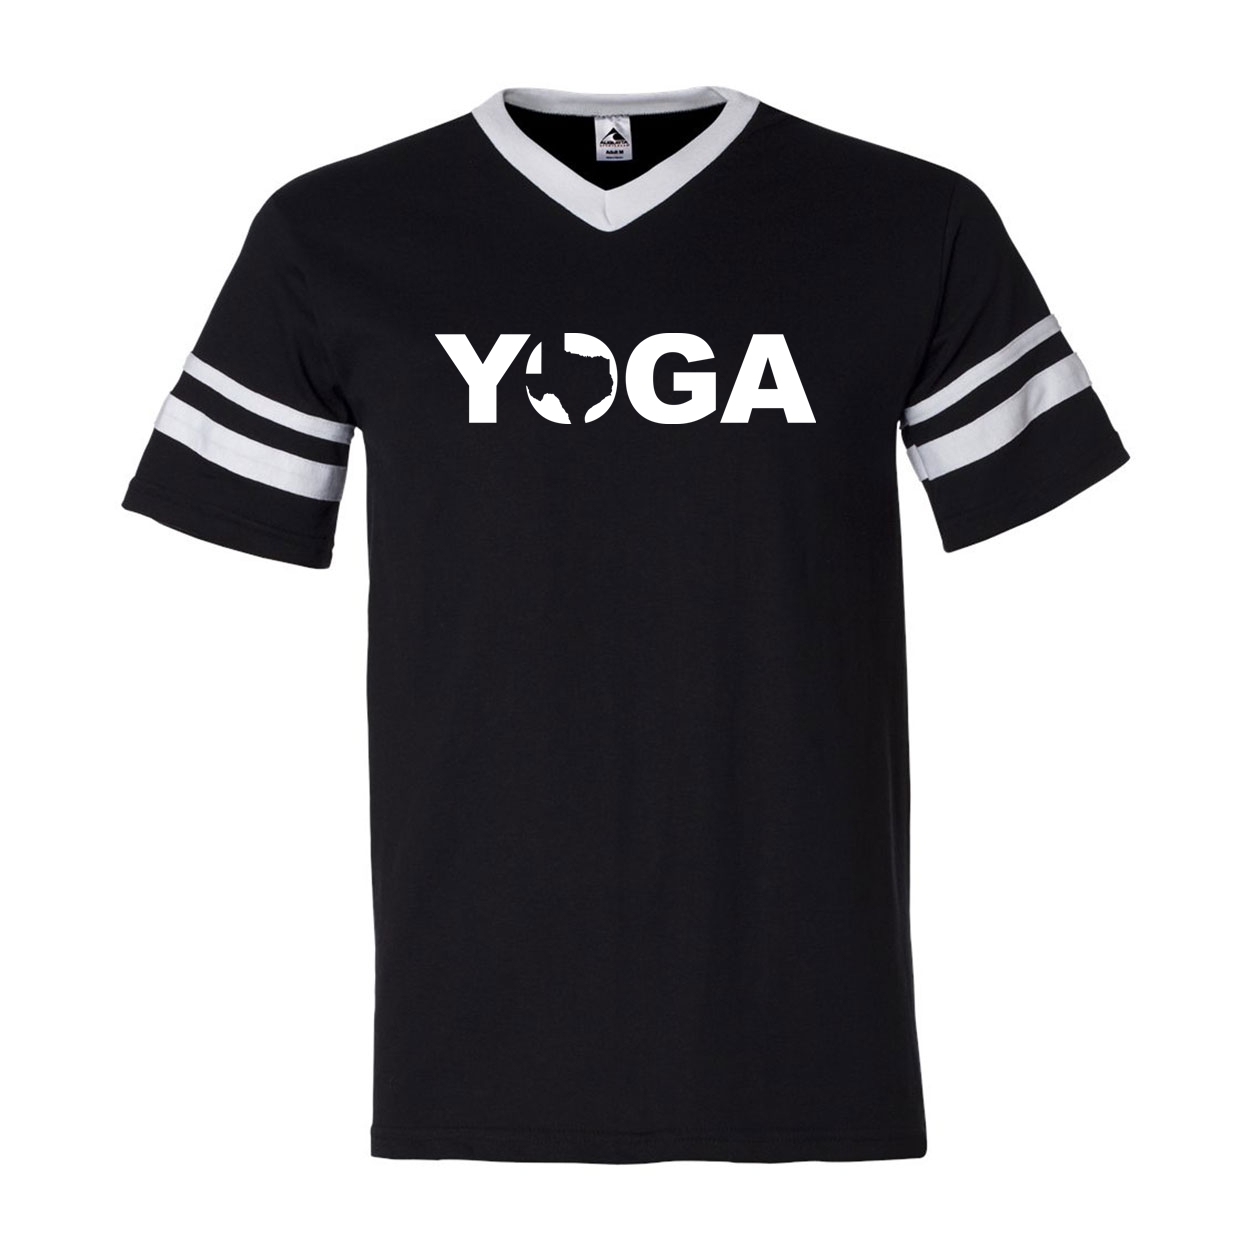 Yoga Texas Classic Premium Striped Jersey T-Shirt Black/White (White Logo)